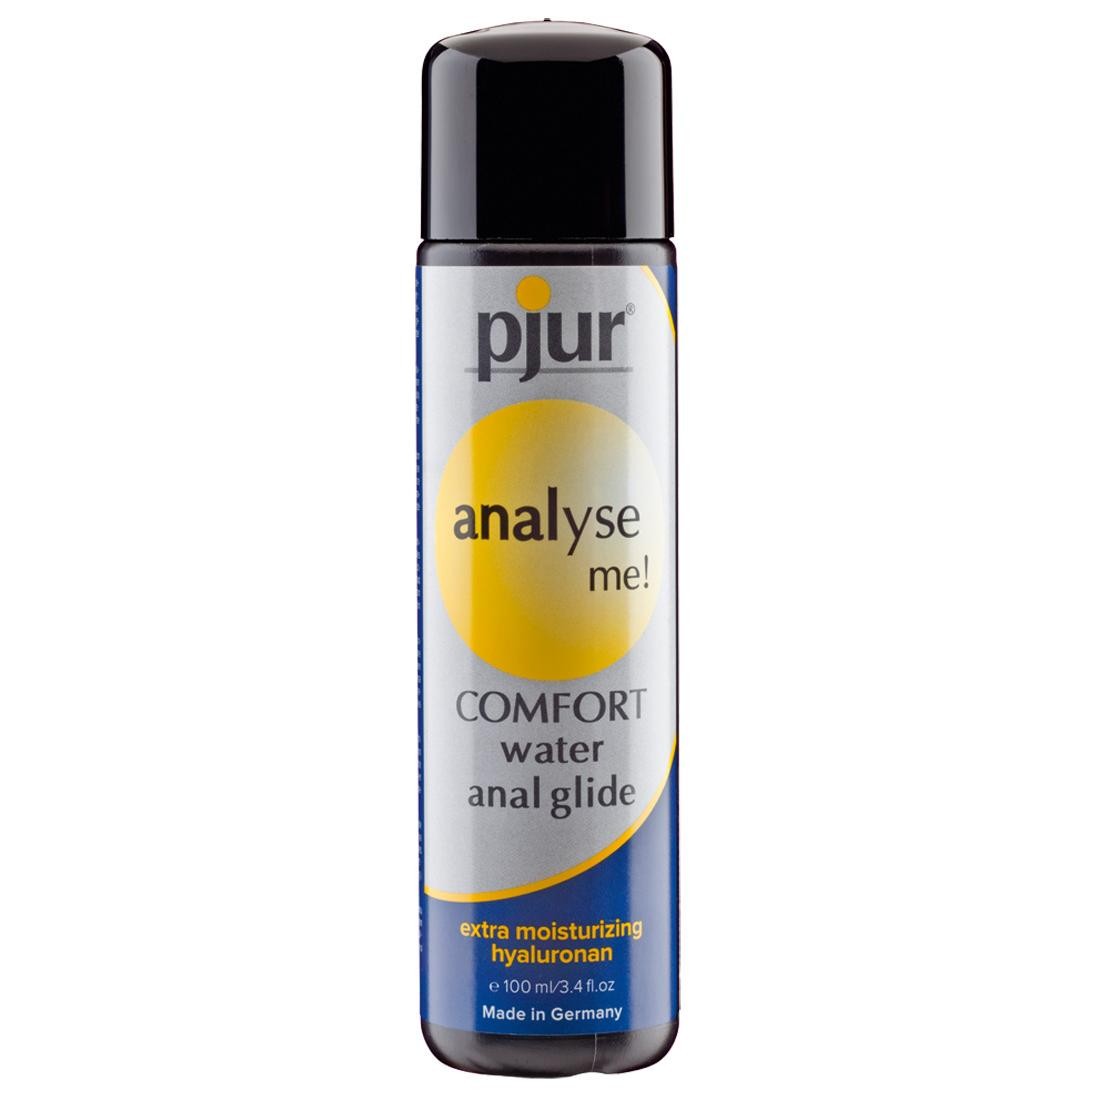  pjur  -  Analyse  me!  Comfort  Water  Anal  Glide  -  100  ml 